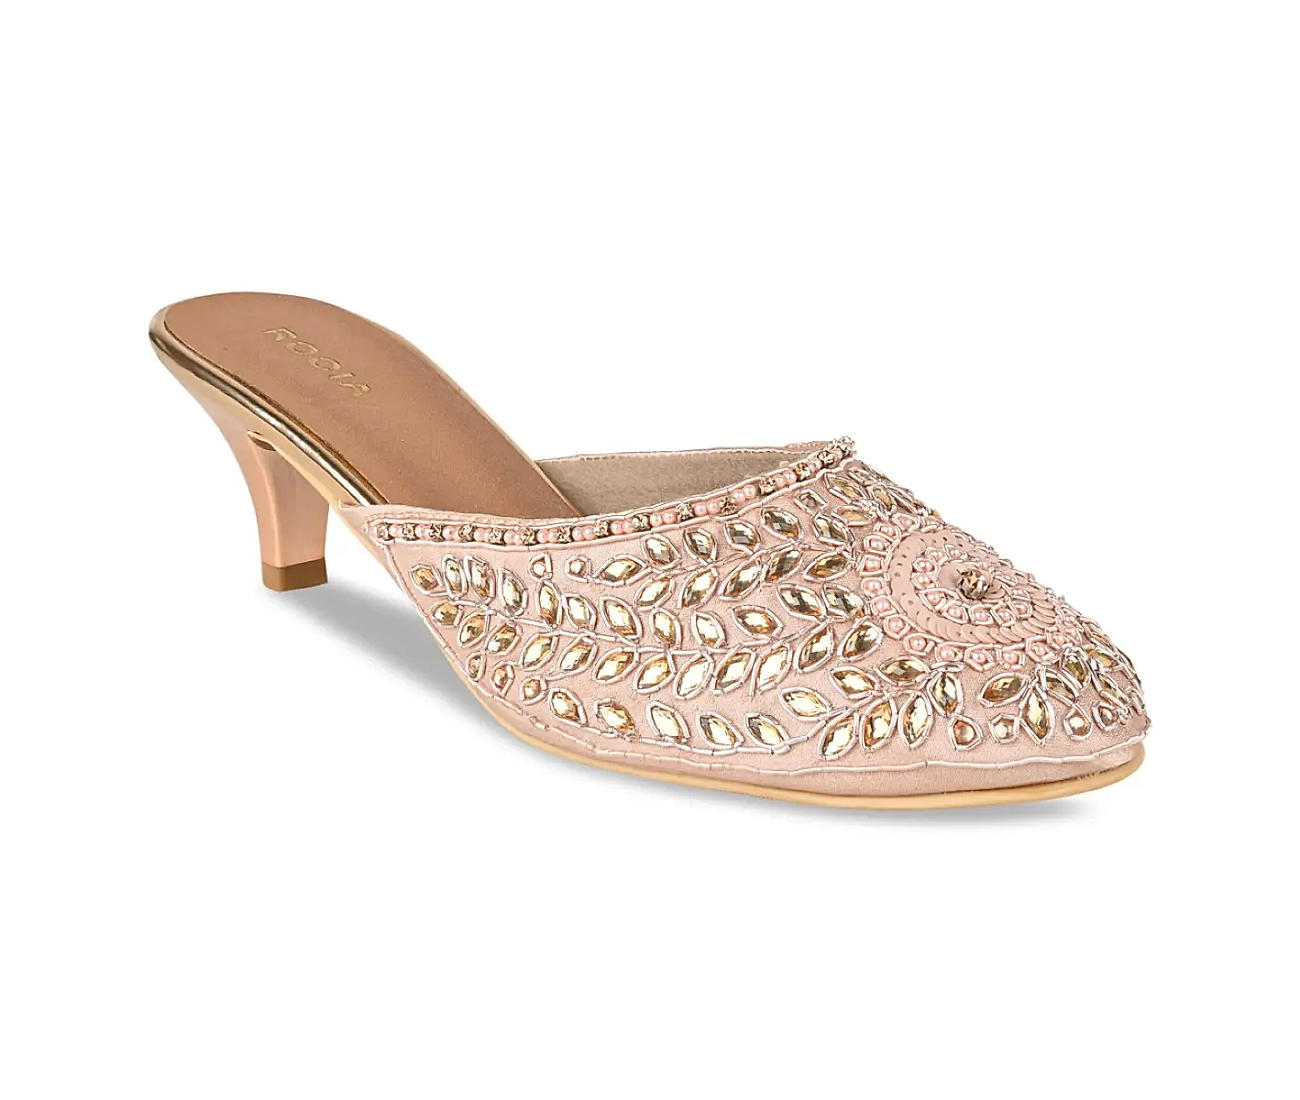 20 Stunning Jeweled Wedding Shoes for All Brides -  Elegantweddinginvites.com Blog